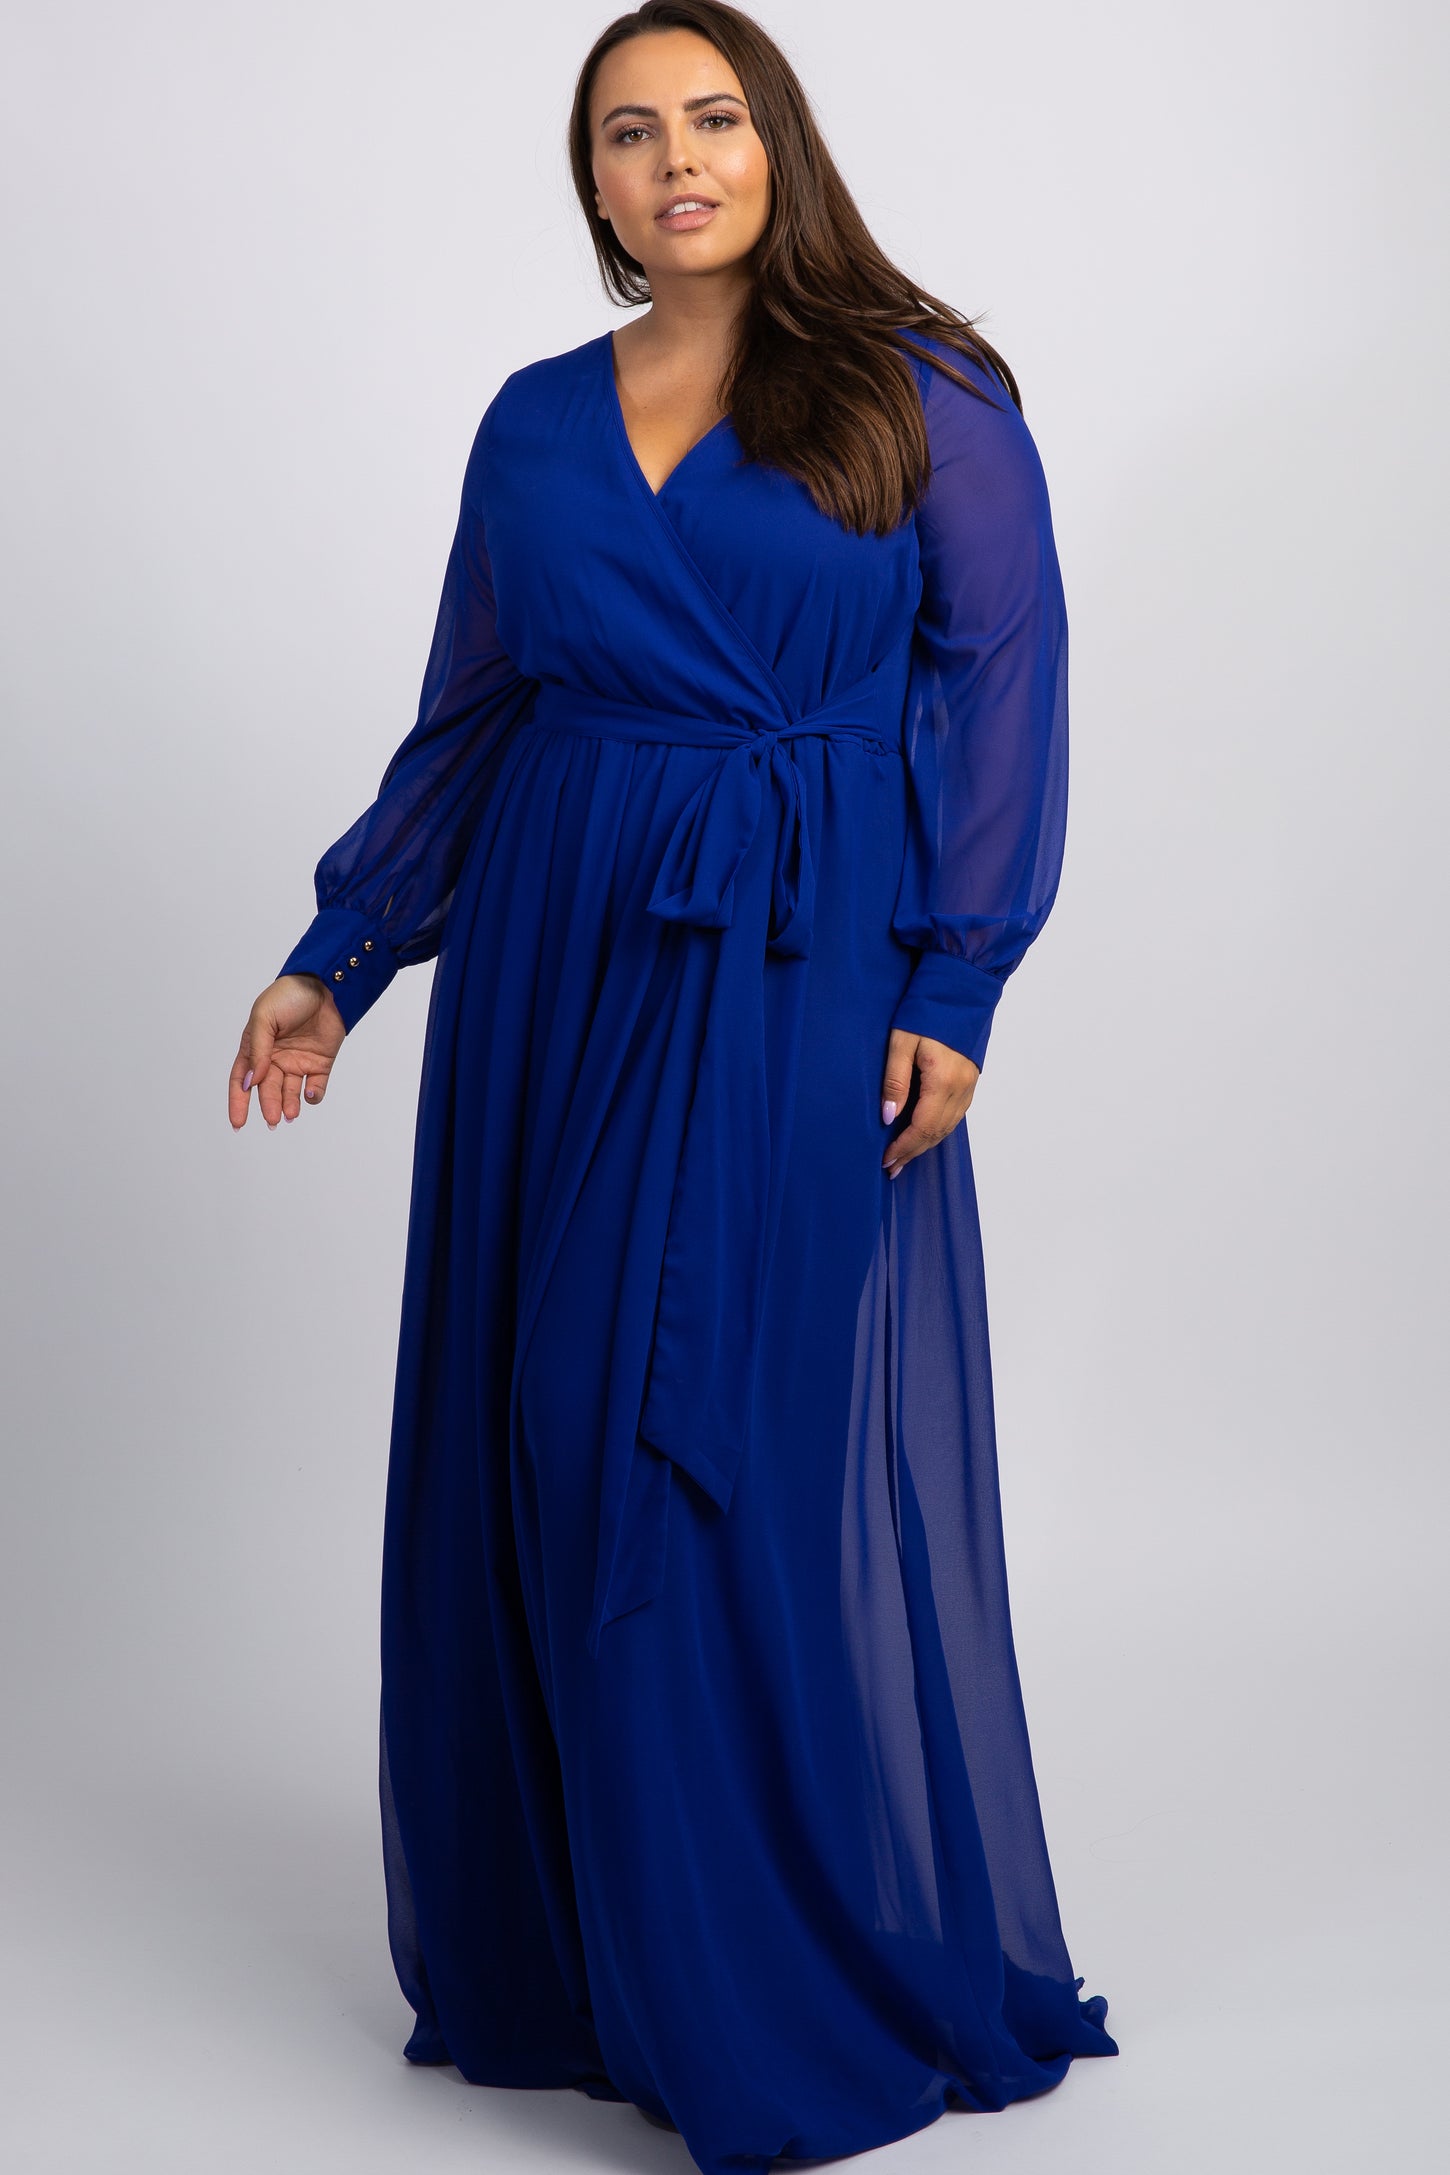 Royal Blue Chiffon Long Sleeve Pleated Plus Maxi Dress